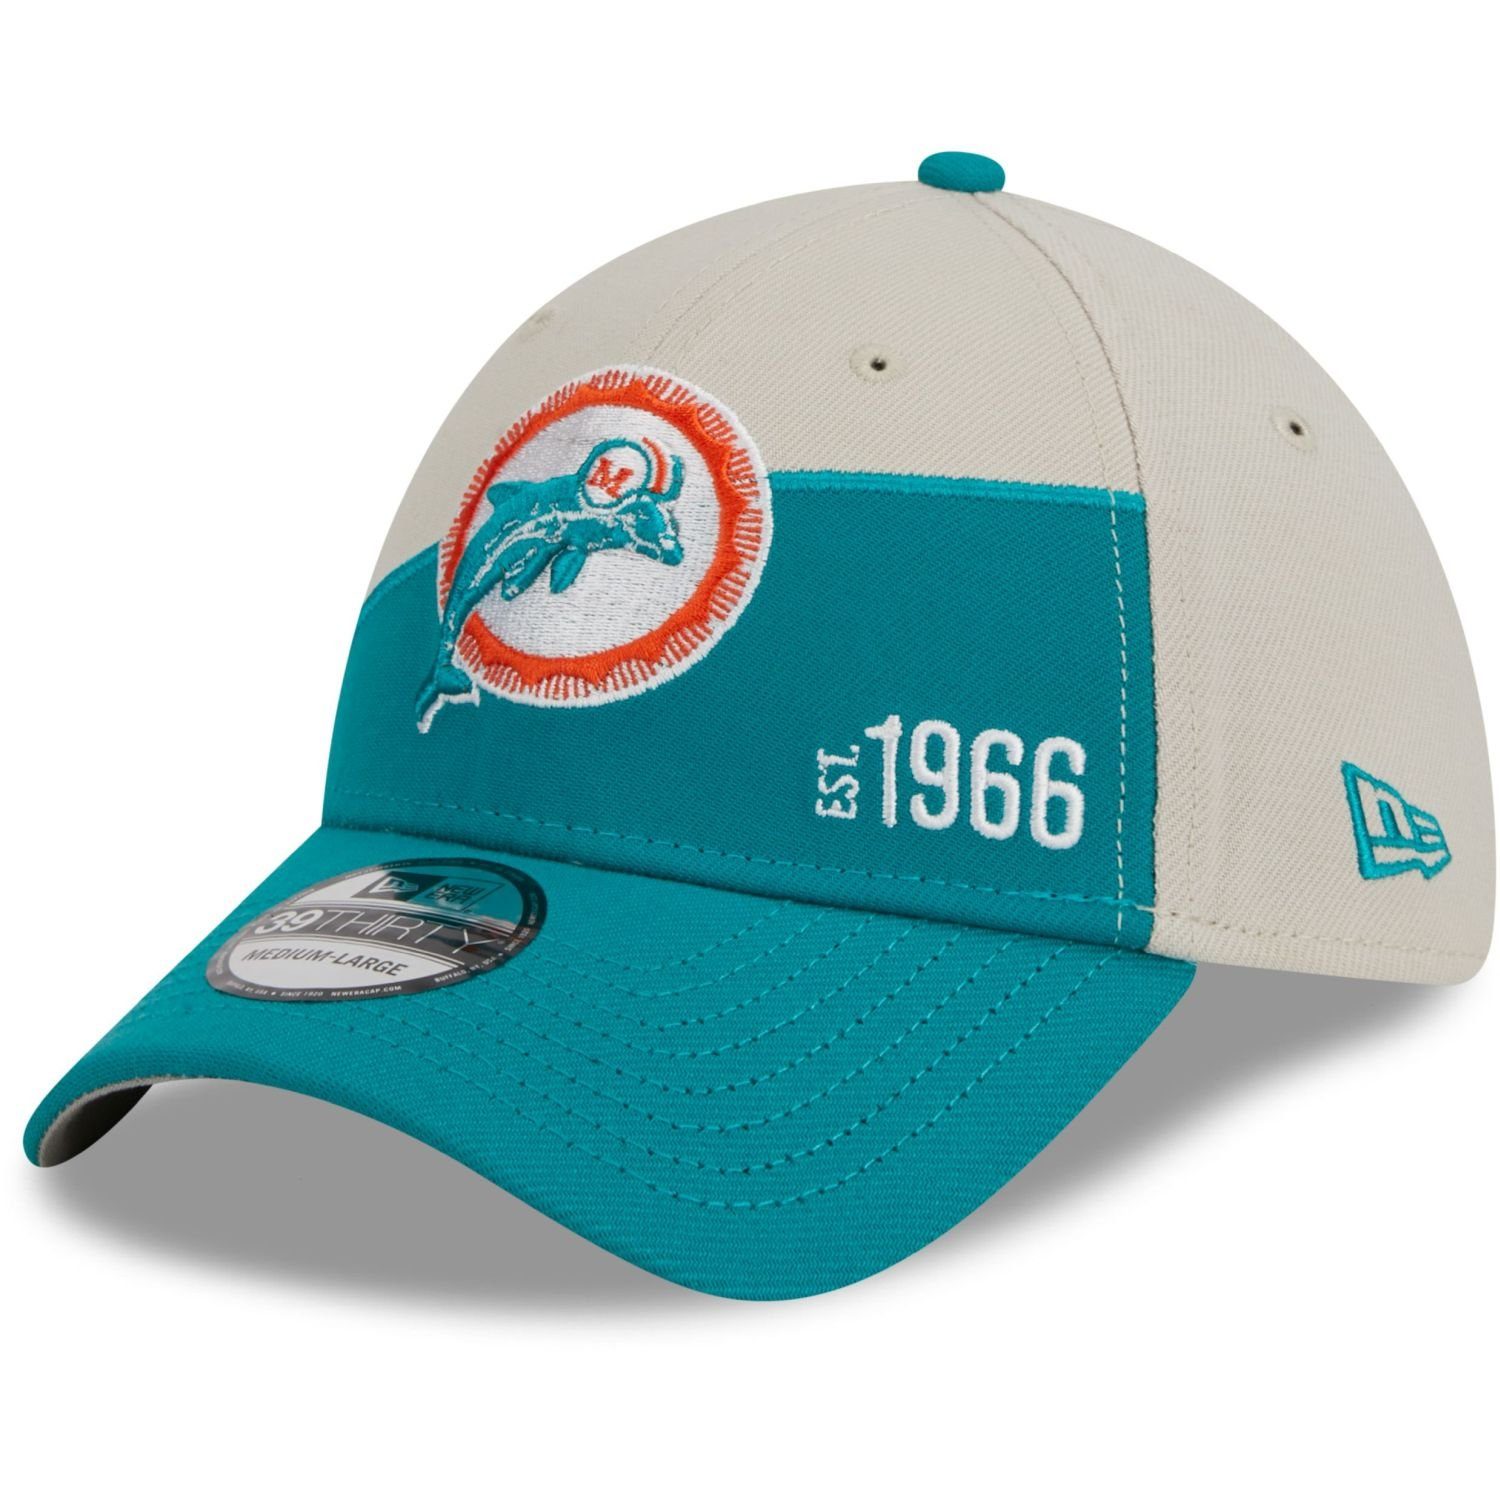 New Era Flex Cap 39Thirty SIDELINE HISTORIC Miami Dolphins